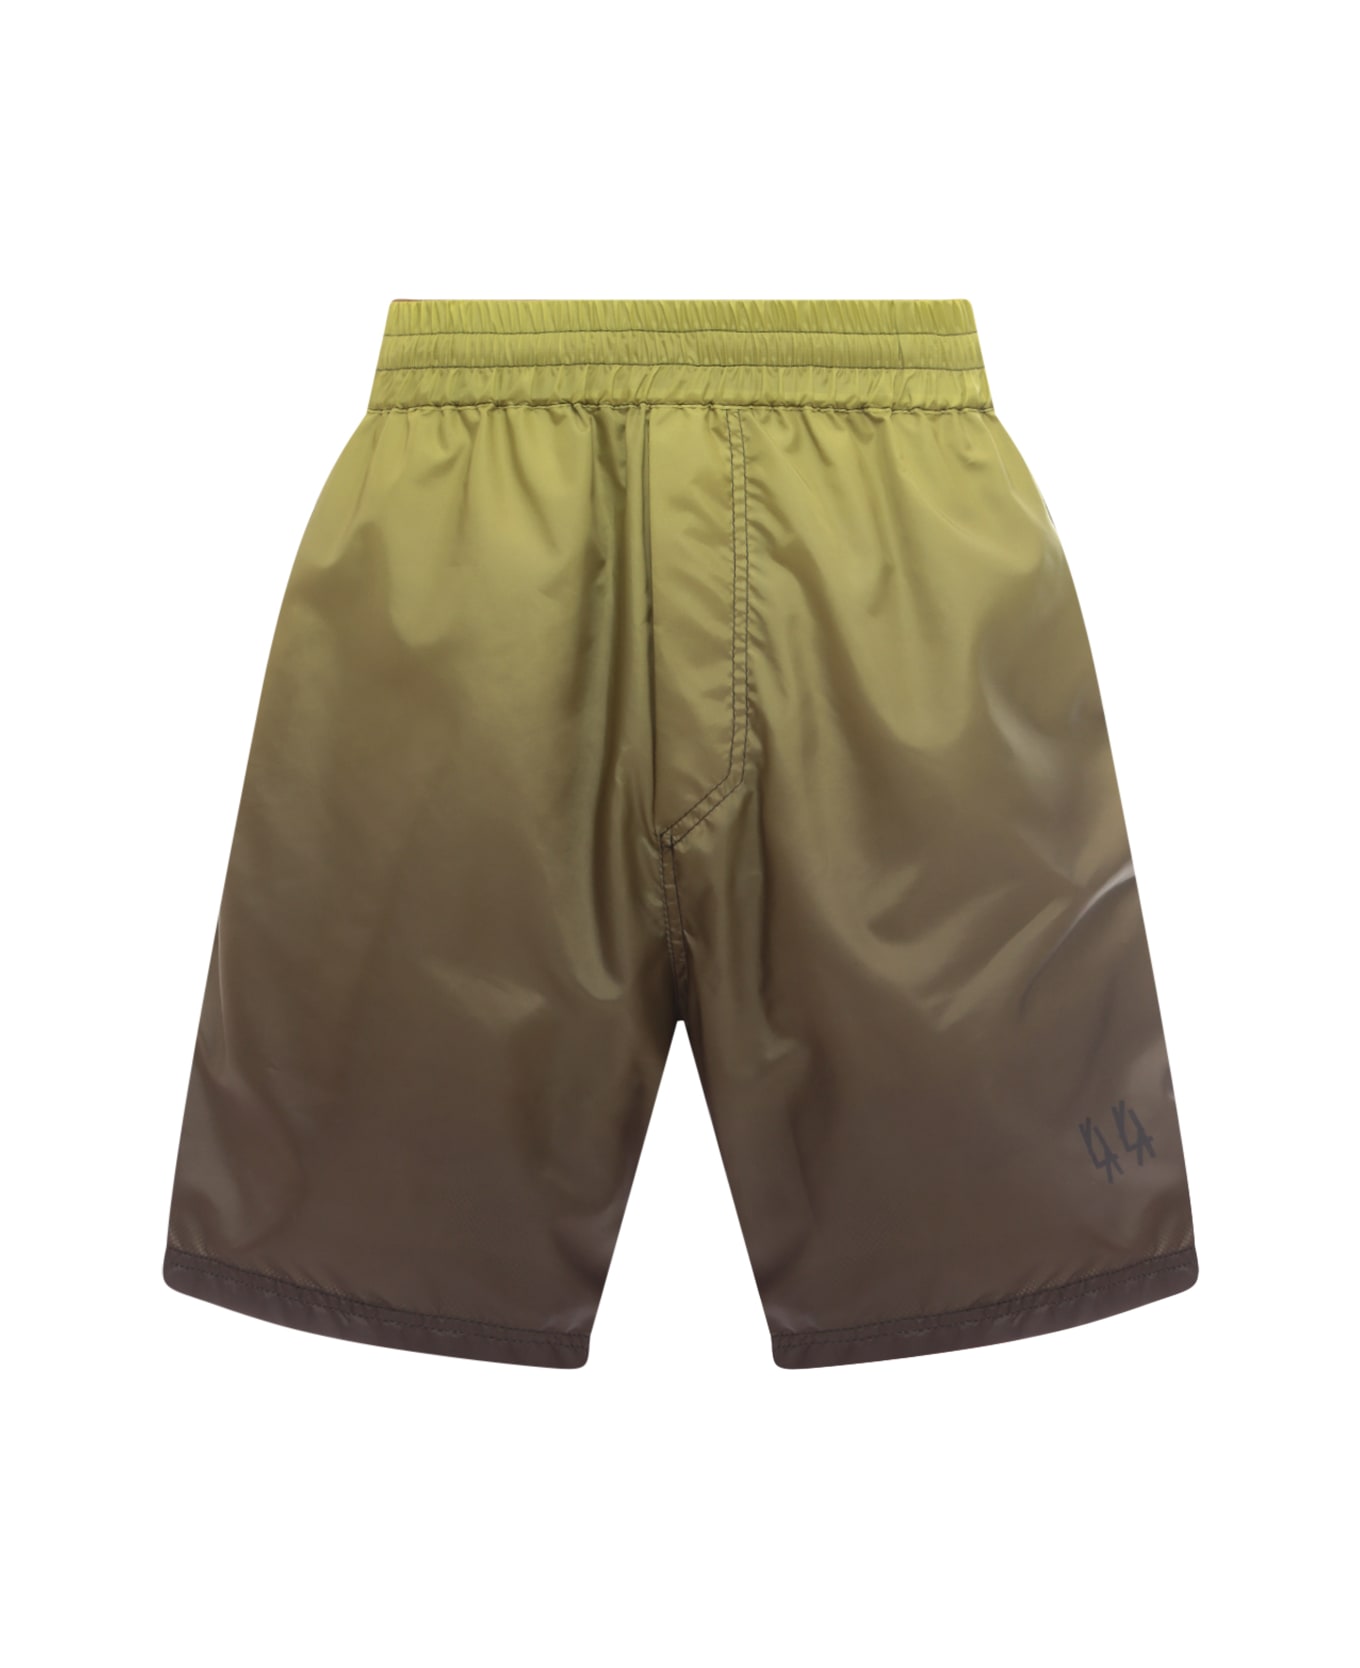 44 Label Group Bermuda Shorts - Green